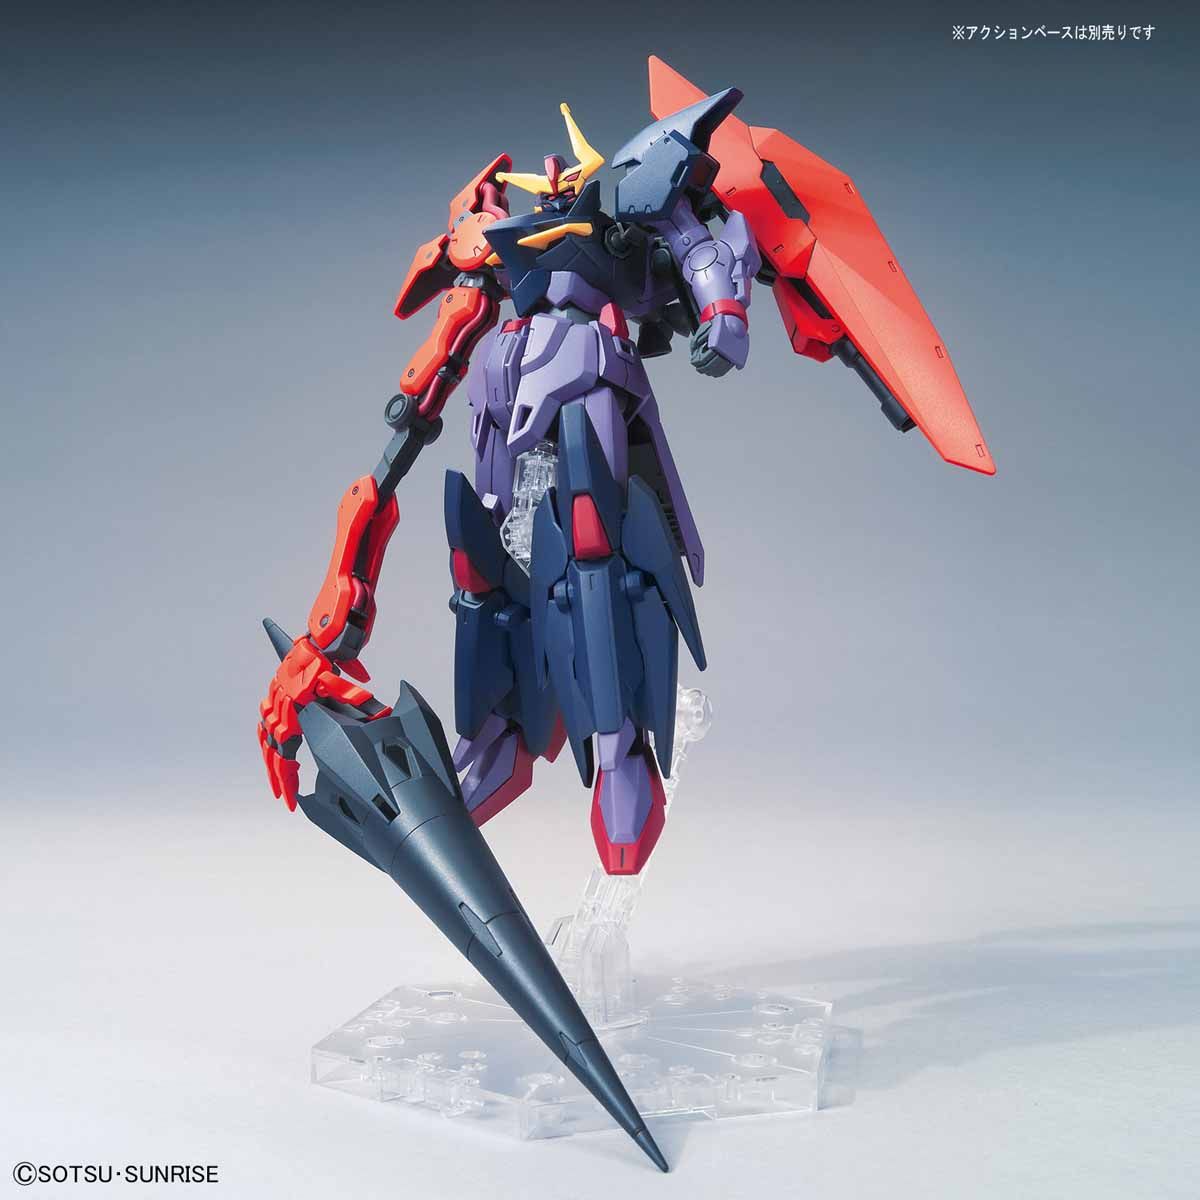 HGBD:R 1/144 Gundam Seltsam - High Grade Gundam Build Divers Re:RISE | Glacier Hobbies